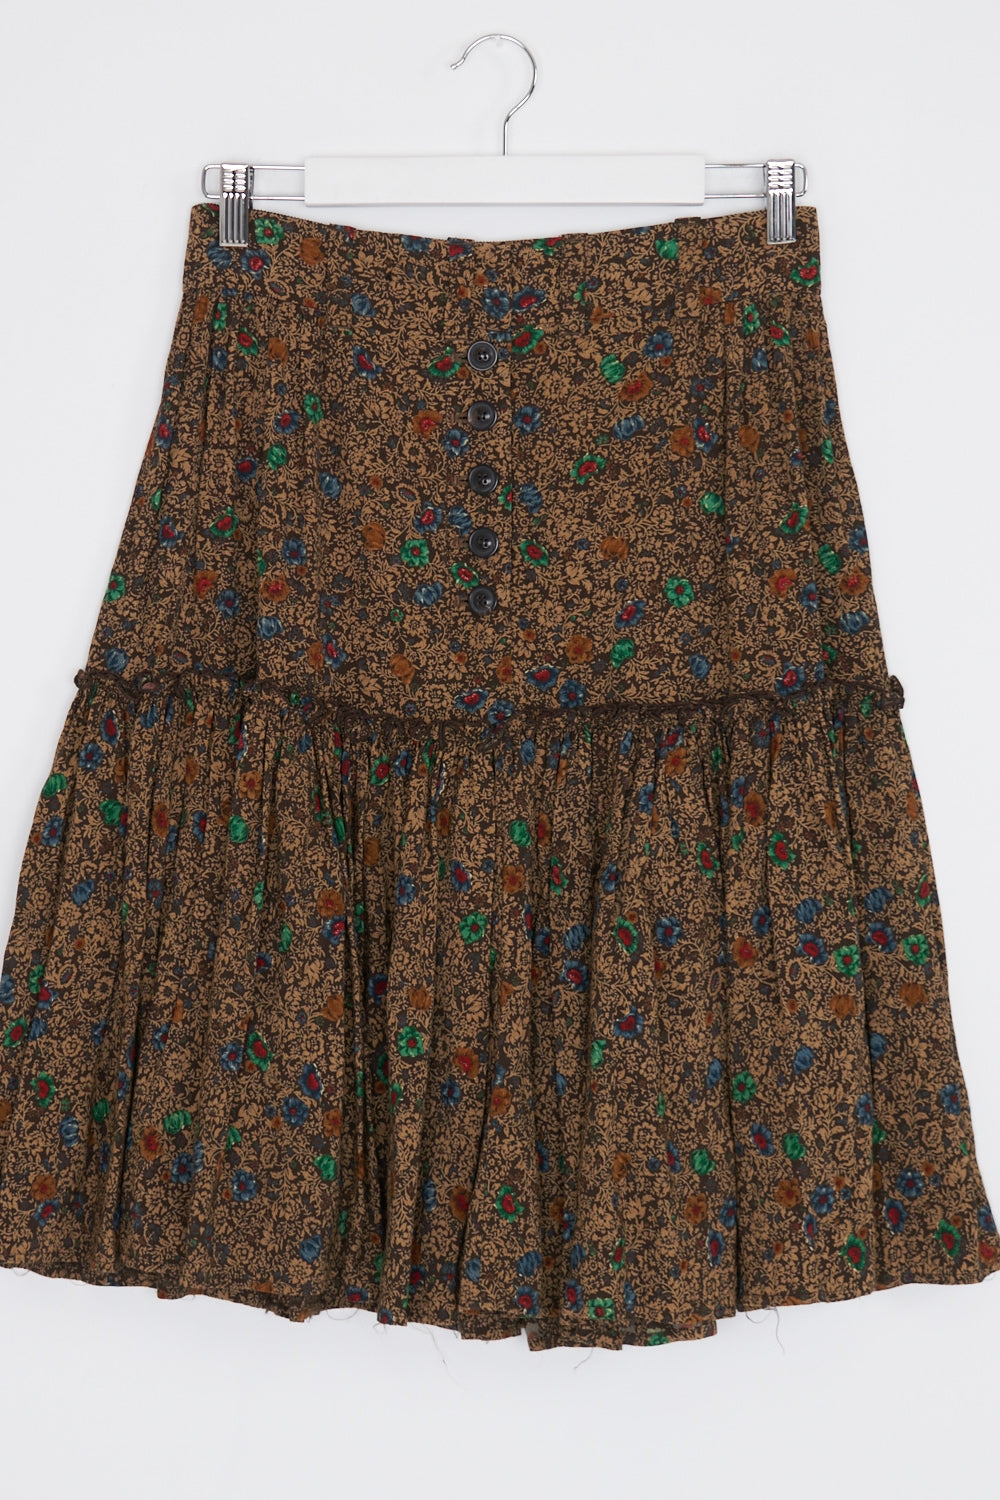 Scanlan Theodore Patterned Silk Skirt 8